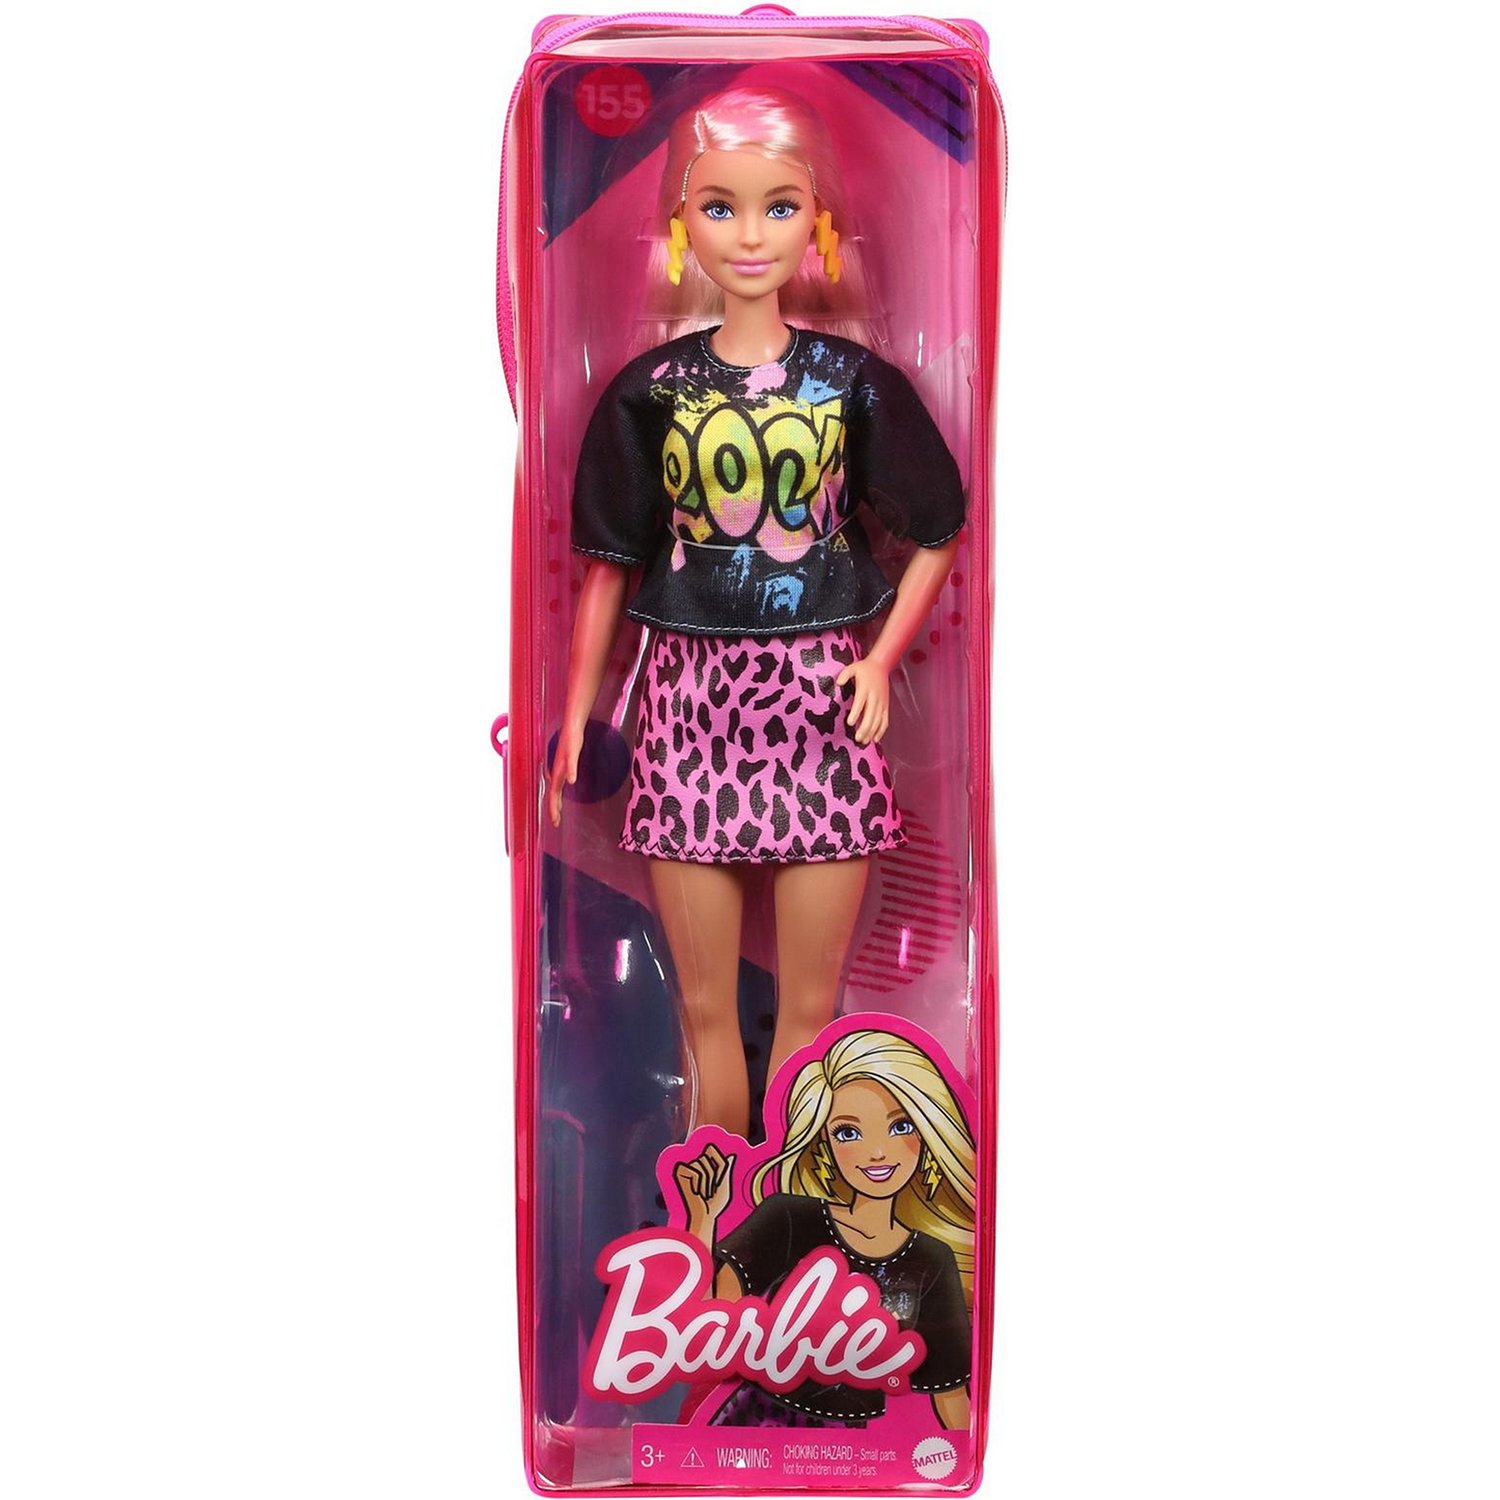 Кукла Barbie Игра с модой 155 GRB47 - фото 2